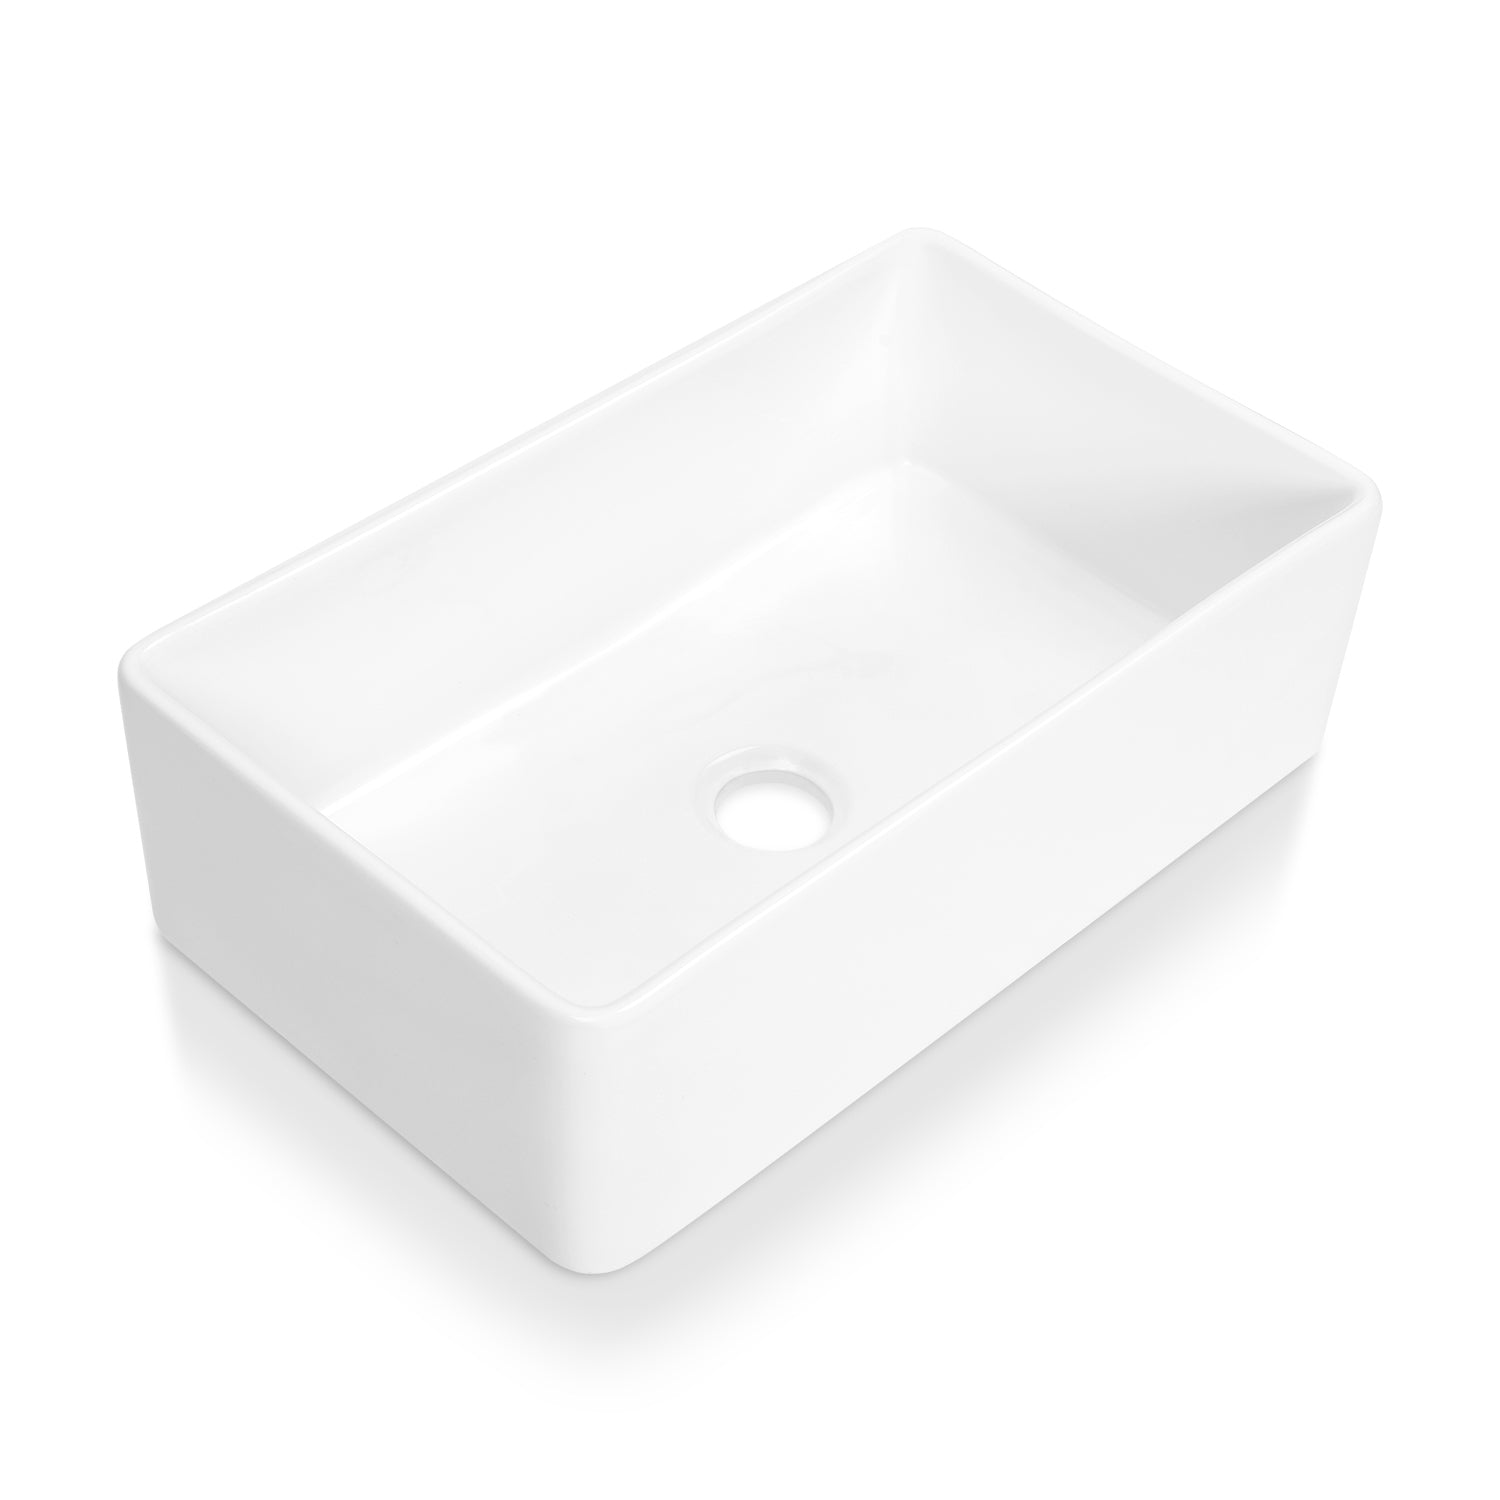 Sinber White Rectangular Ceramic Single Bowl Apron farmhouse Kitchen Sink With Strainer